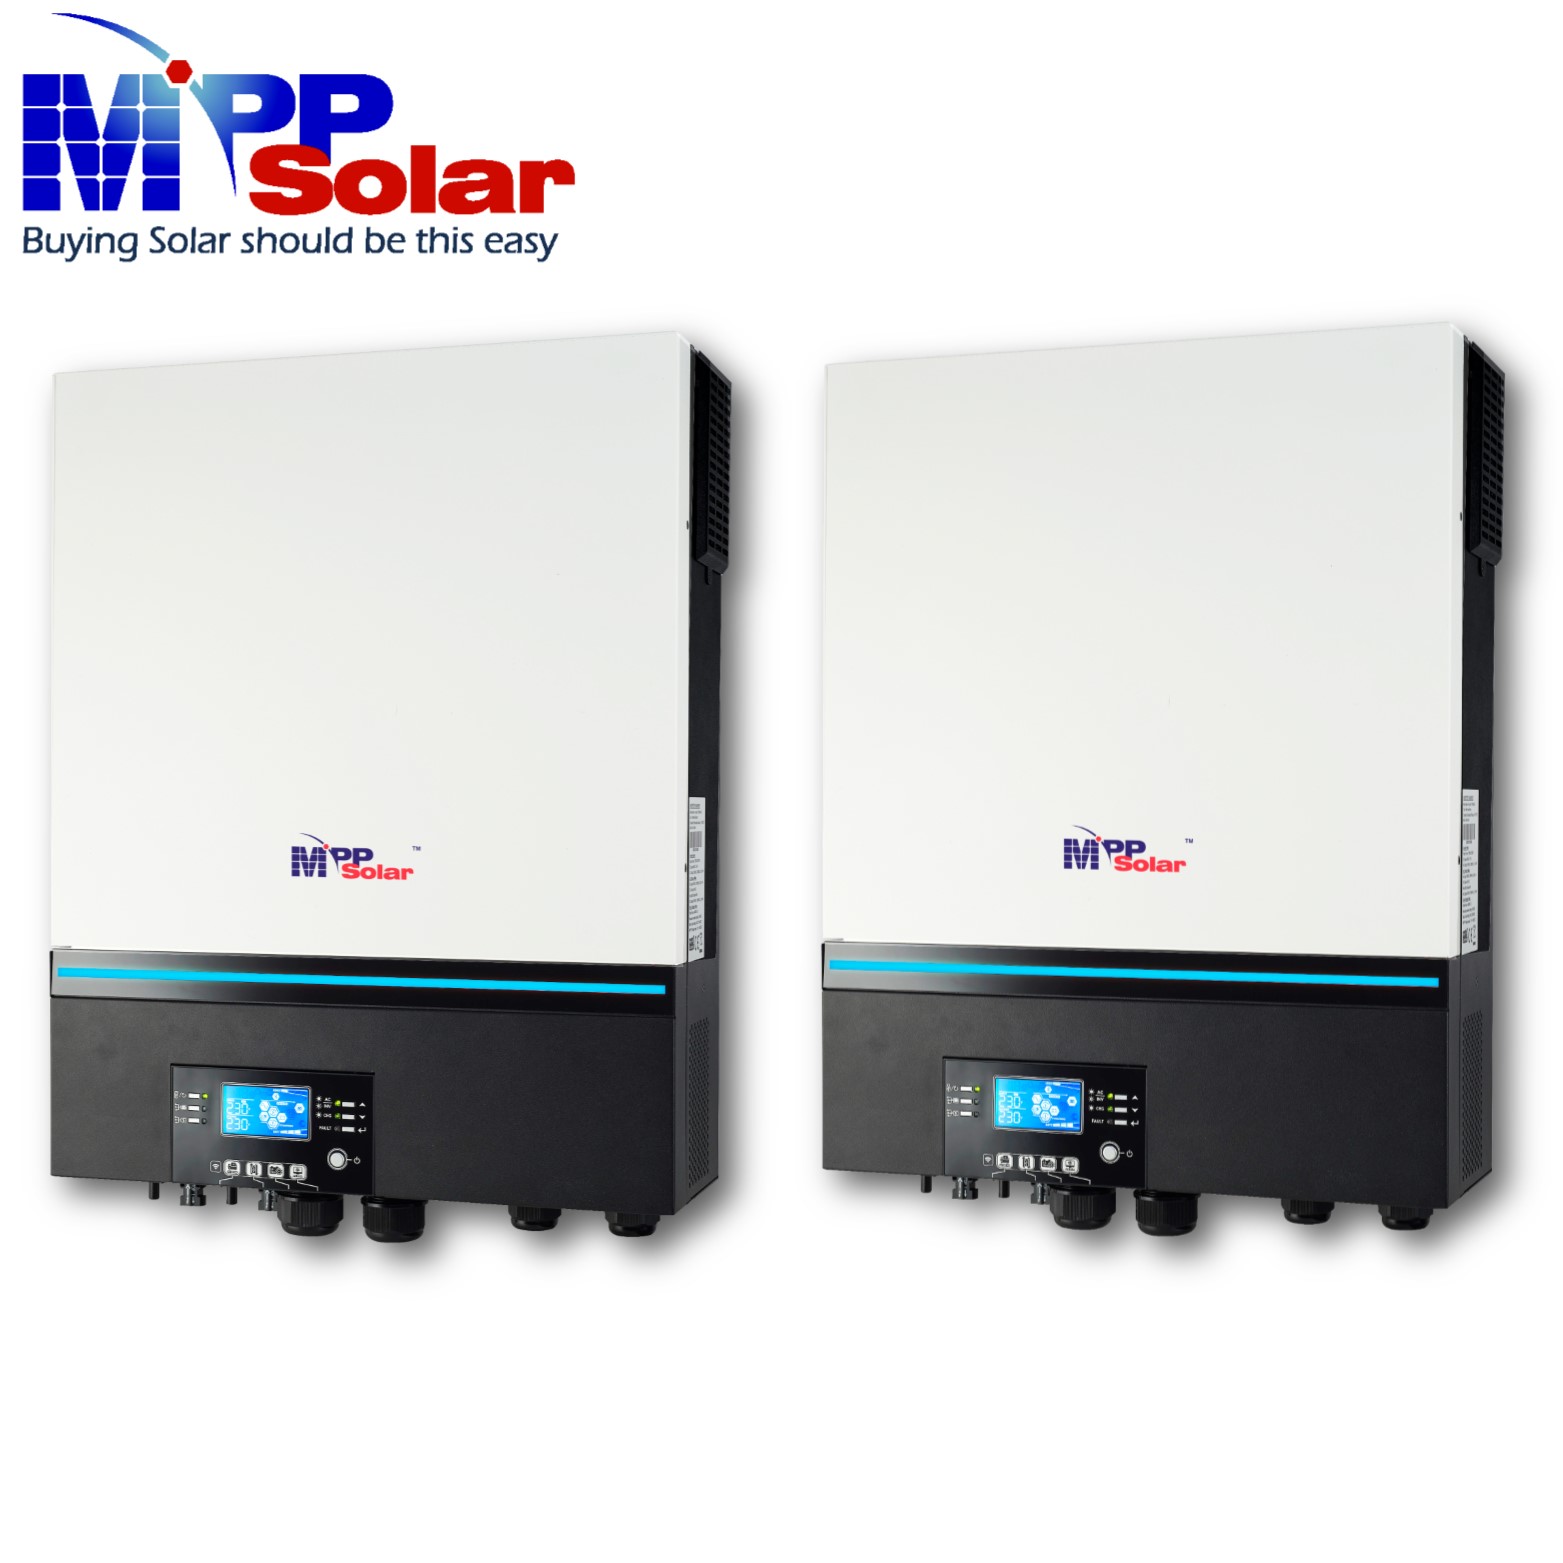 MPP Solar LV6548 Review 